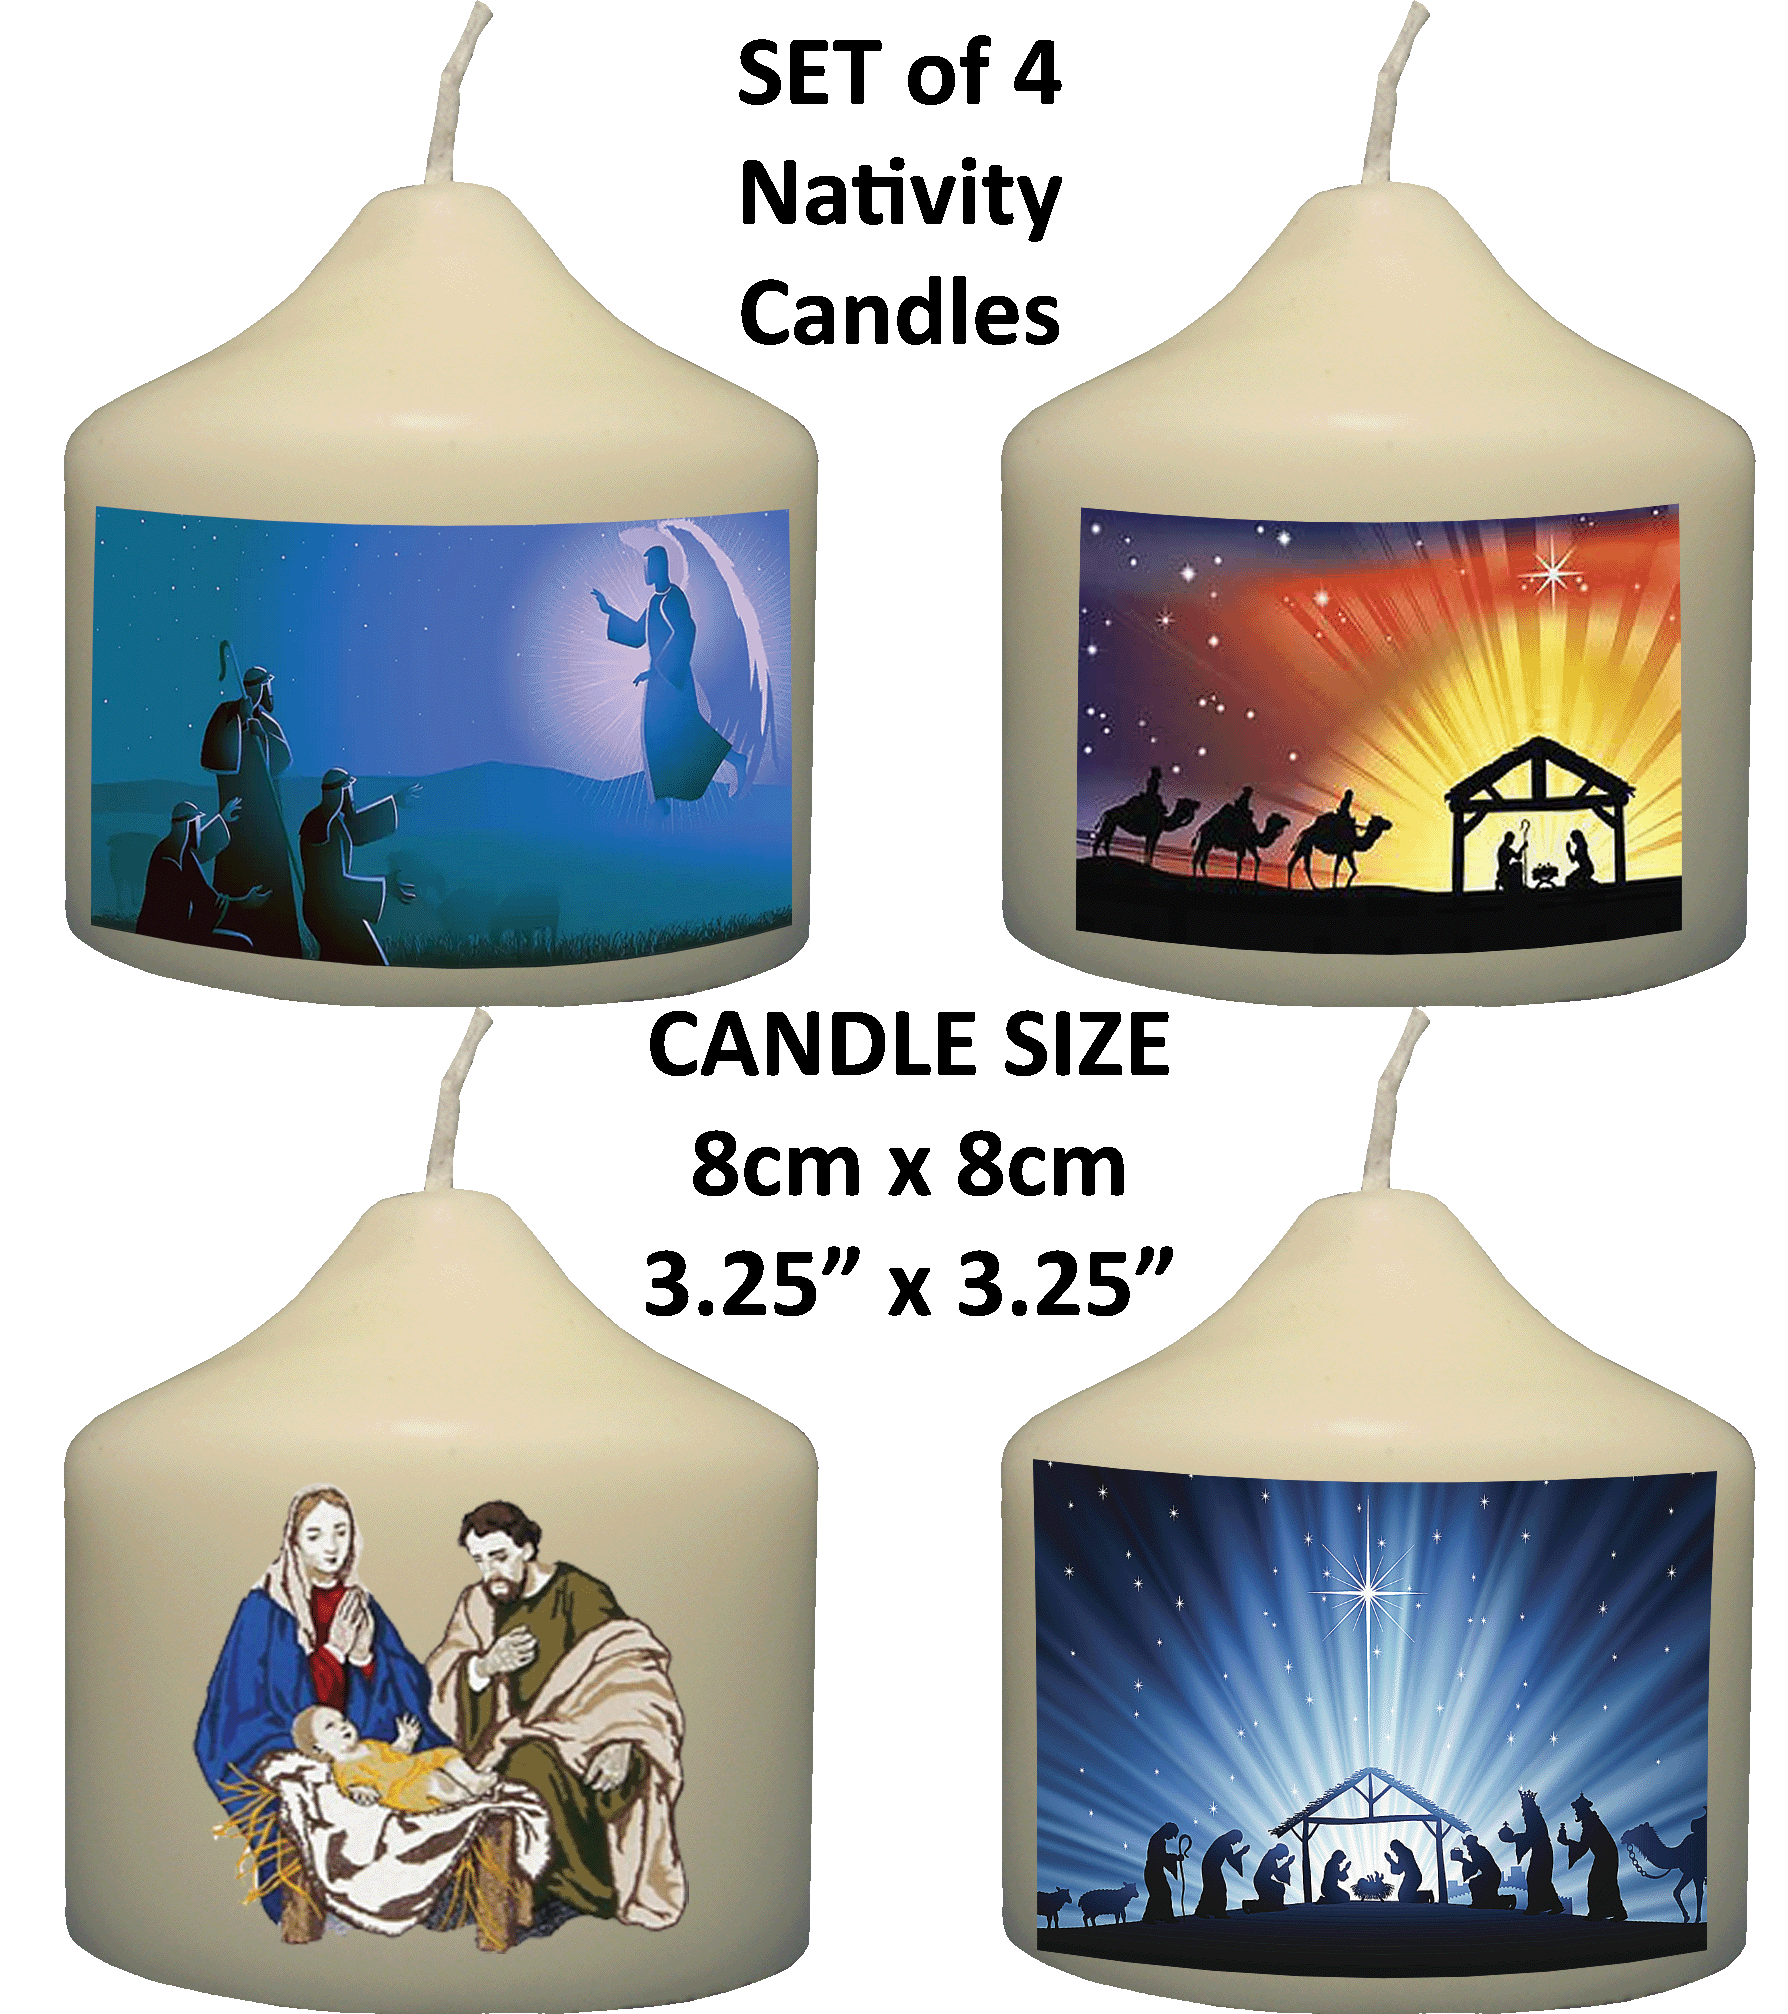 SET_of_4_Nativity_Candles_80x80_copy